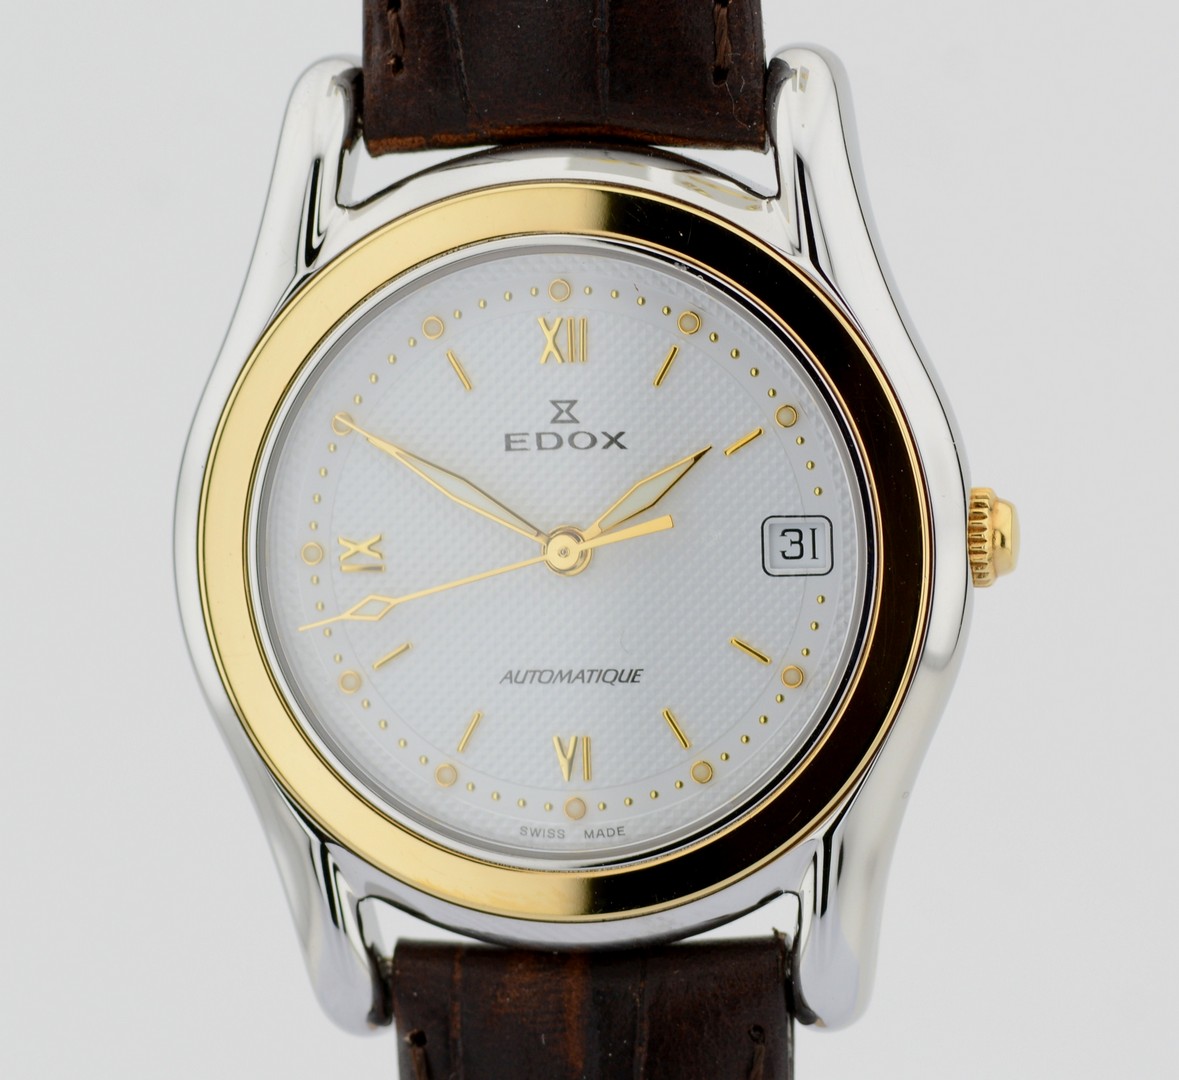 Edox / Automatic Date - Gentlmen's Steel Wrist Watch - Image 2 of 7